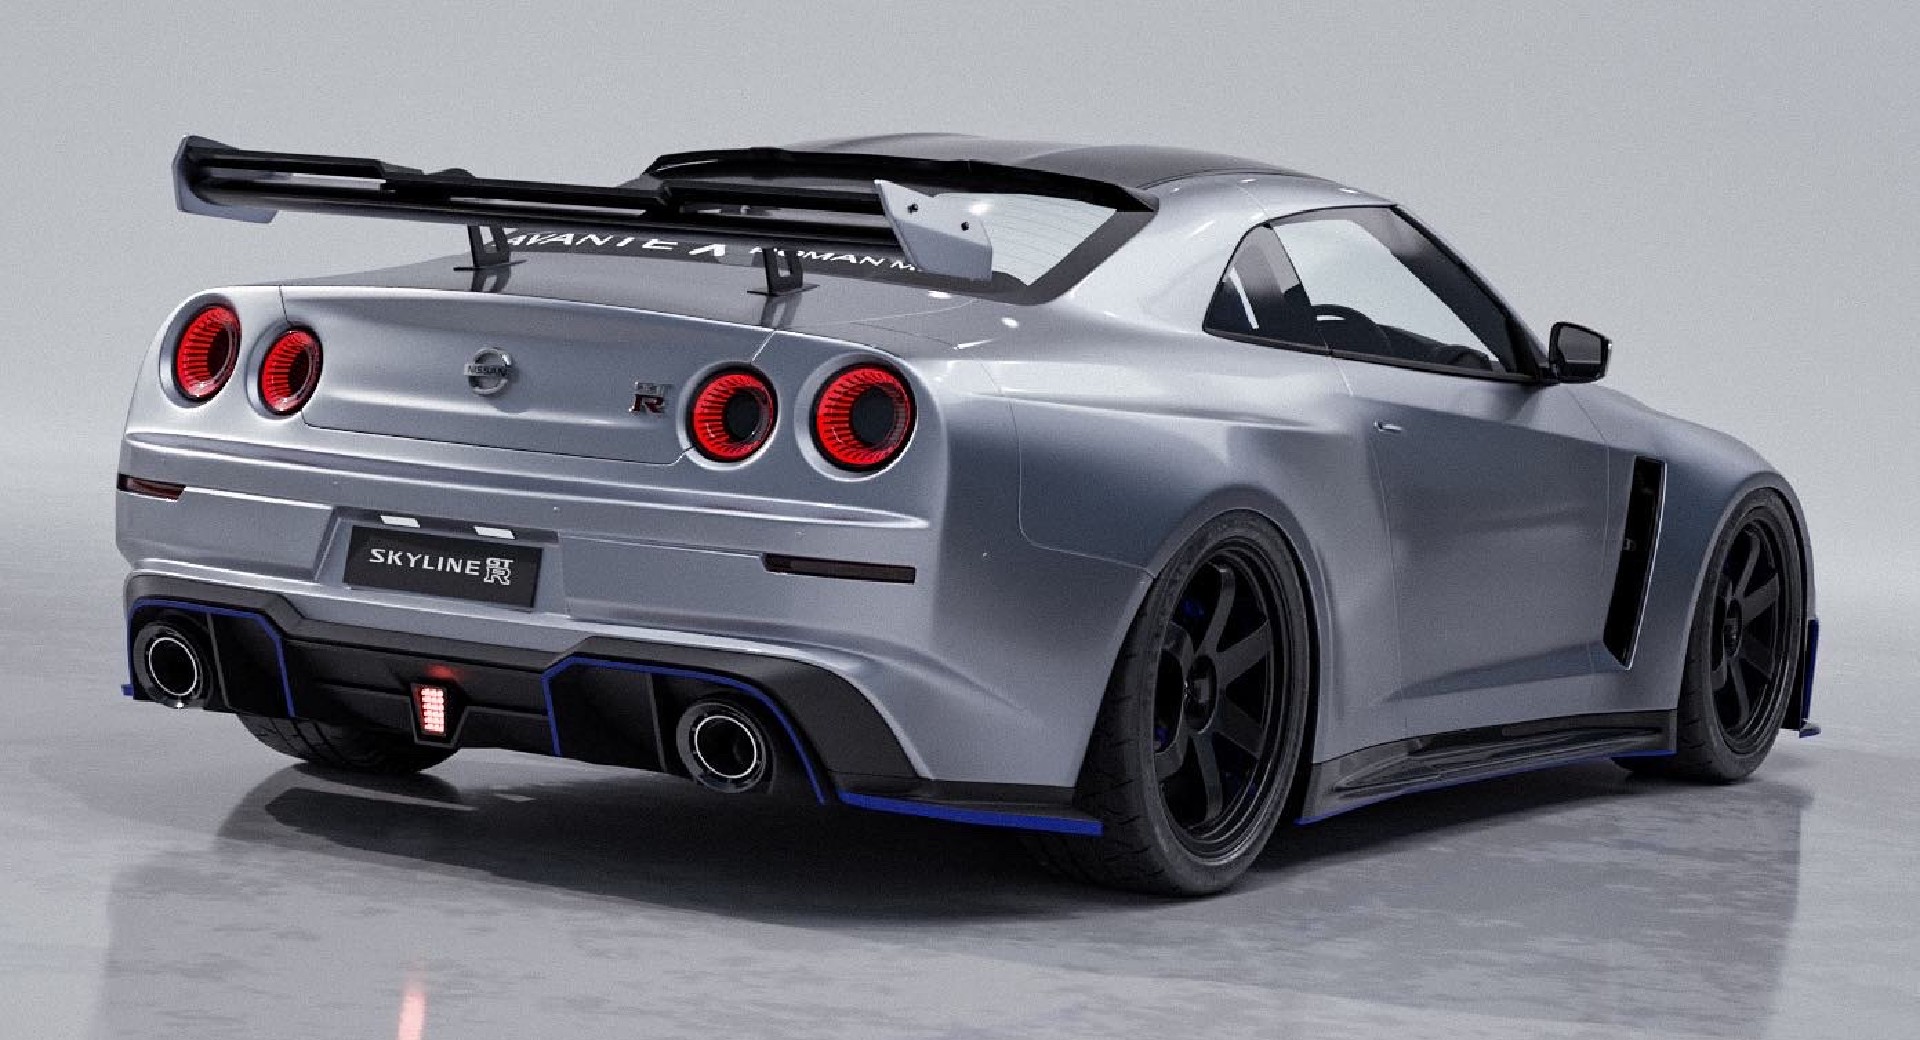 Nissan Skyline GTR R36 - Concept or Reality? - Stance Auto Magazine